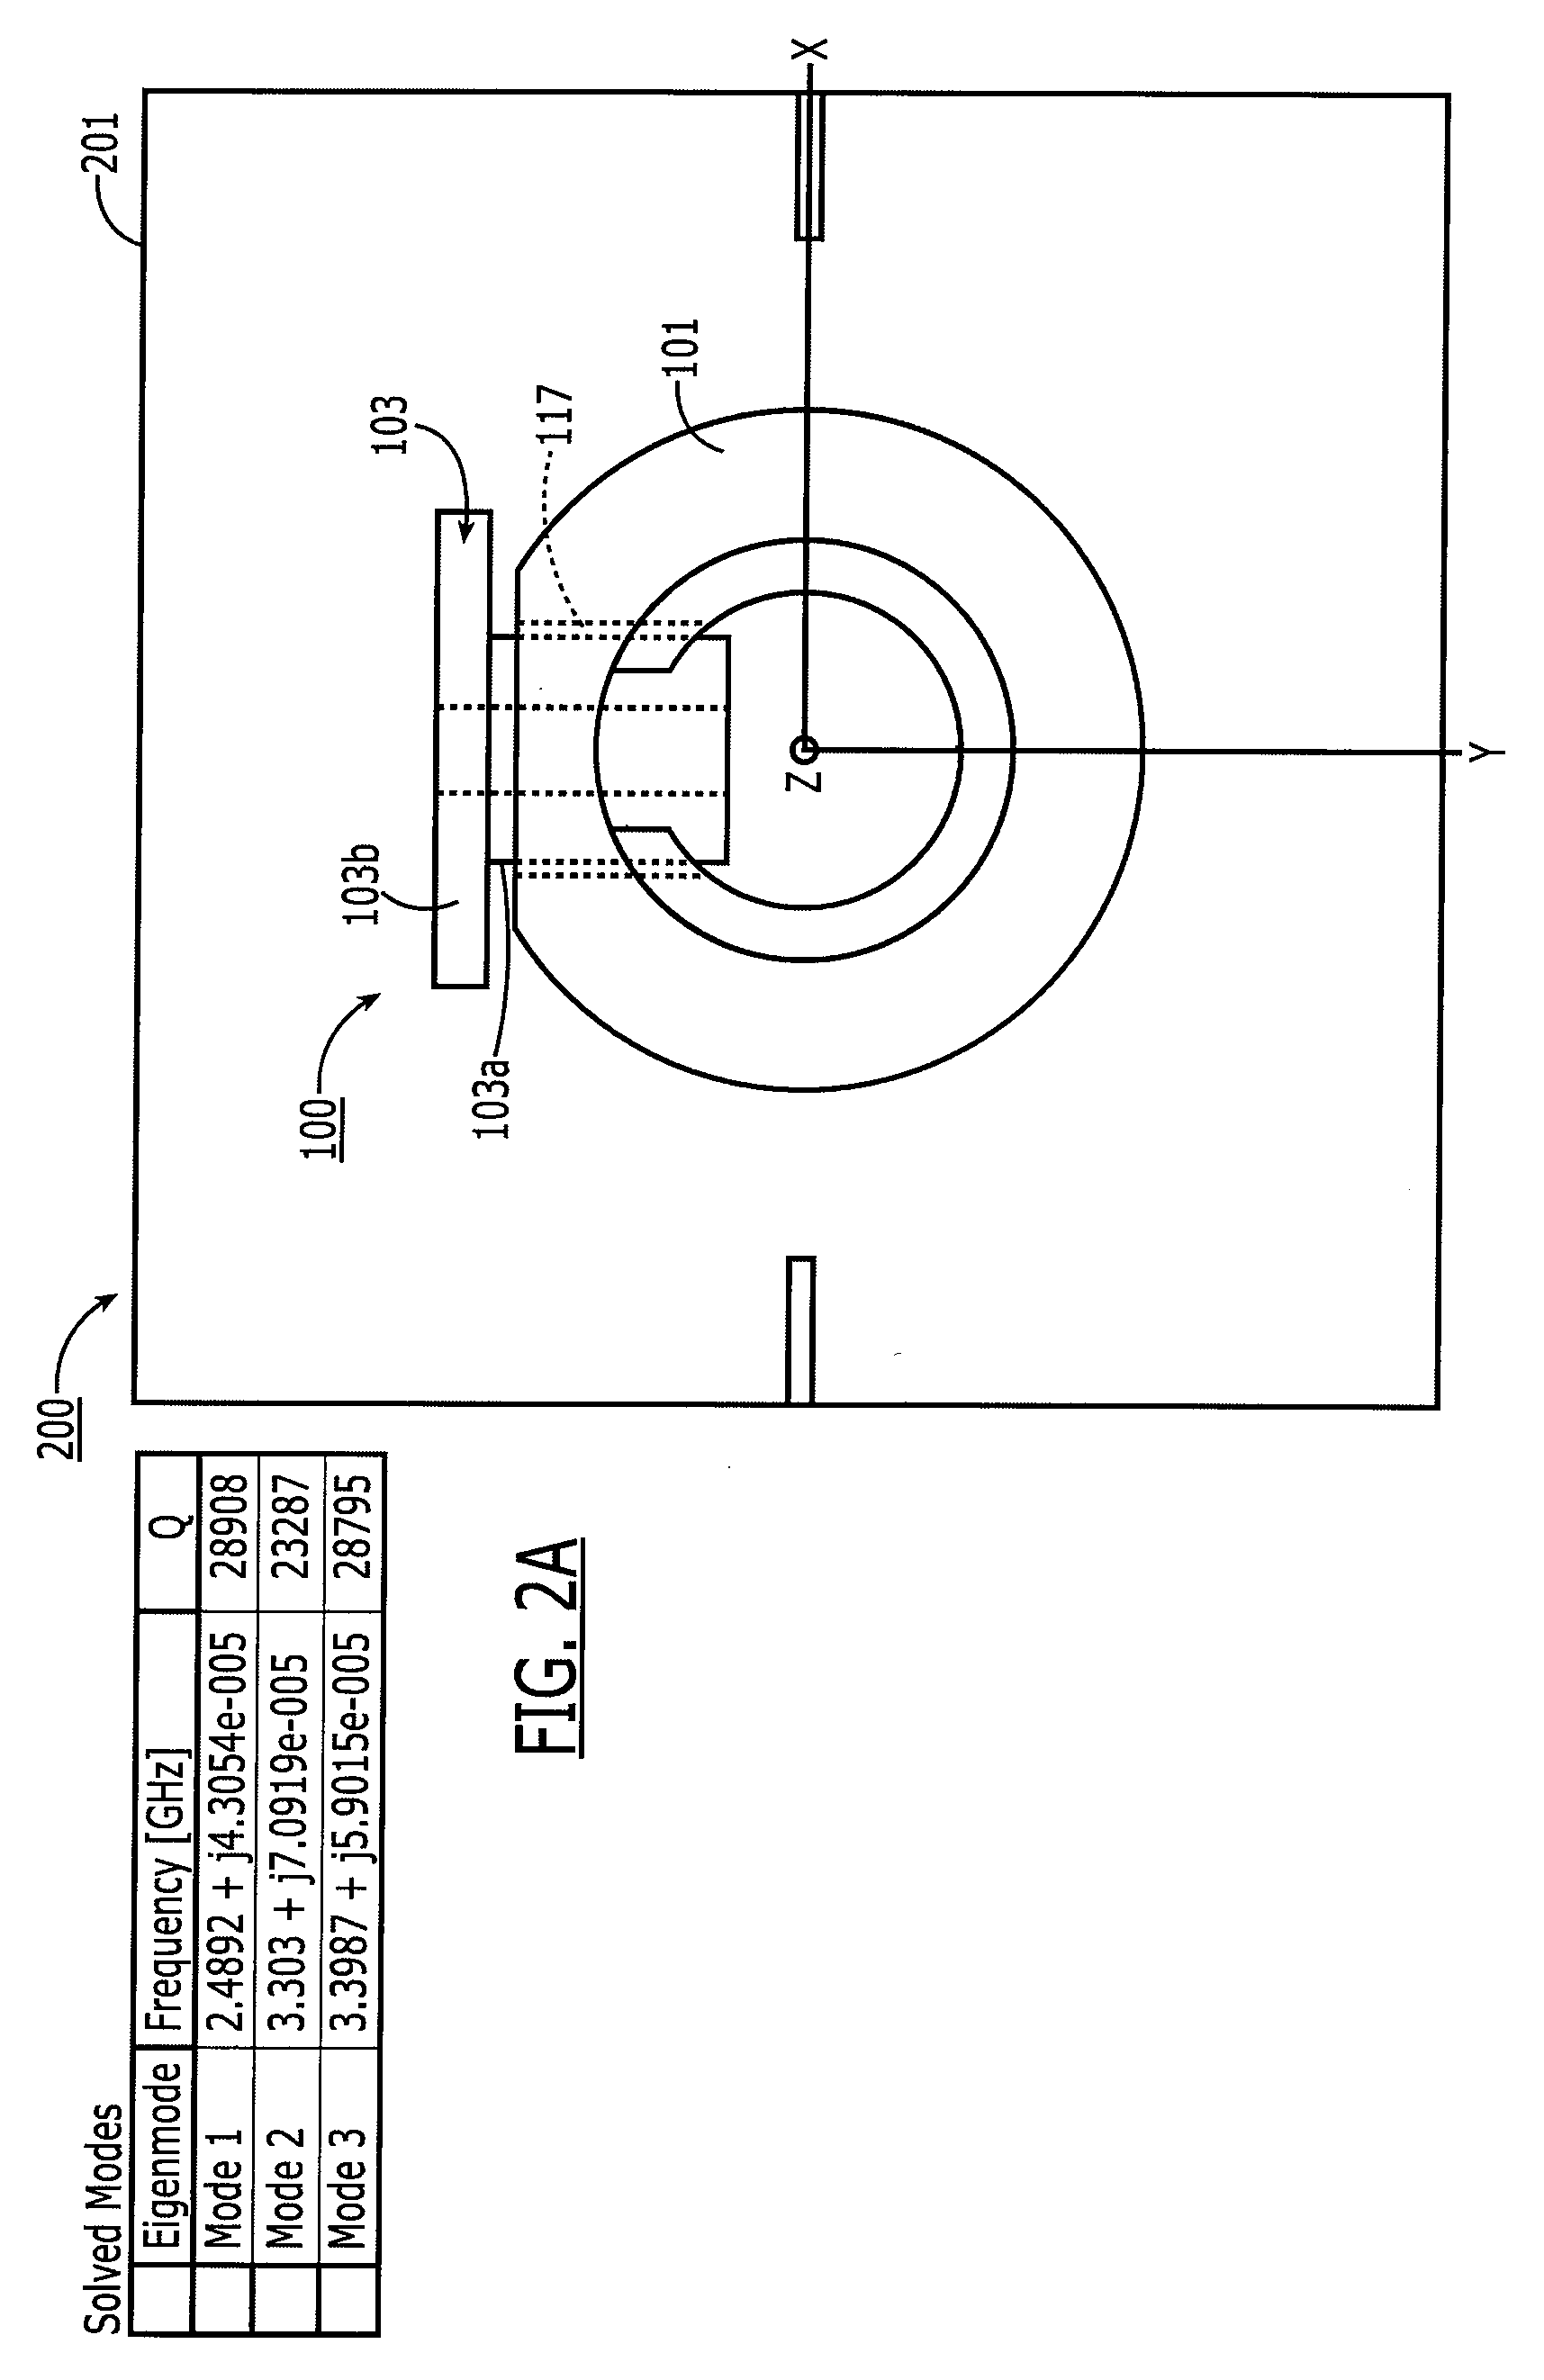 Tunable Dielectric Resonator Circuit